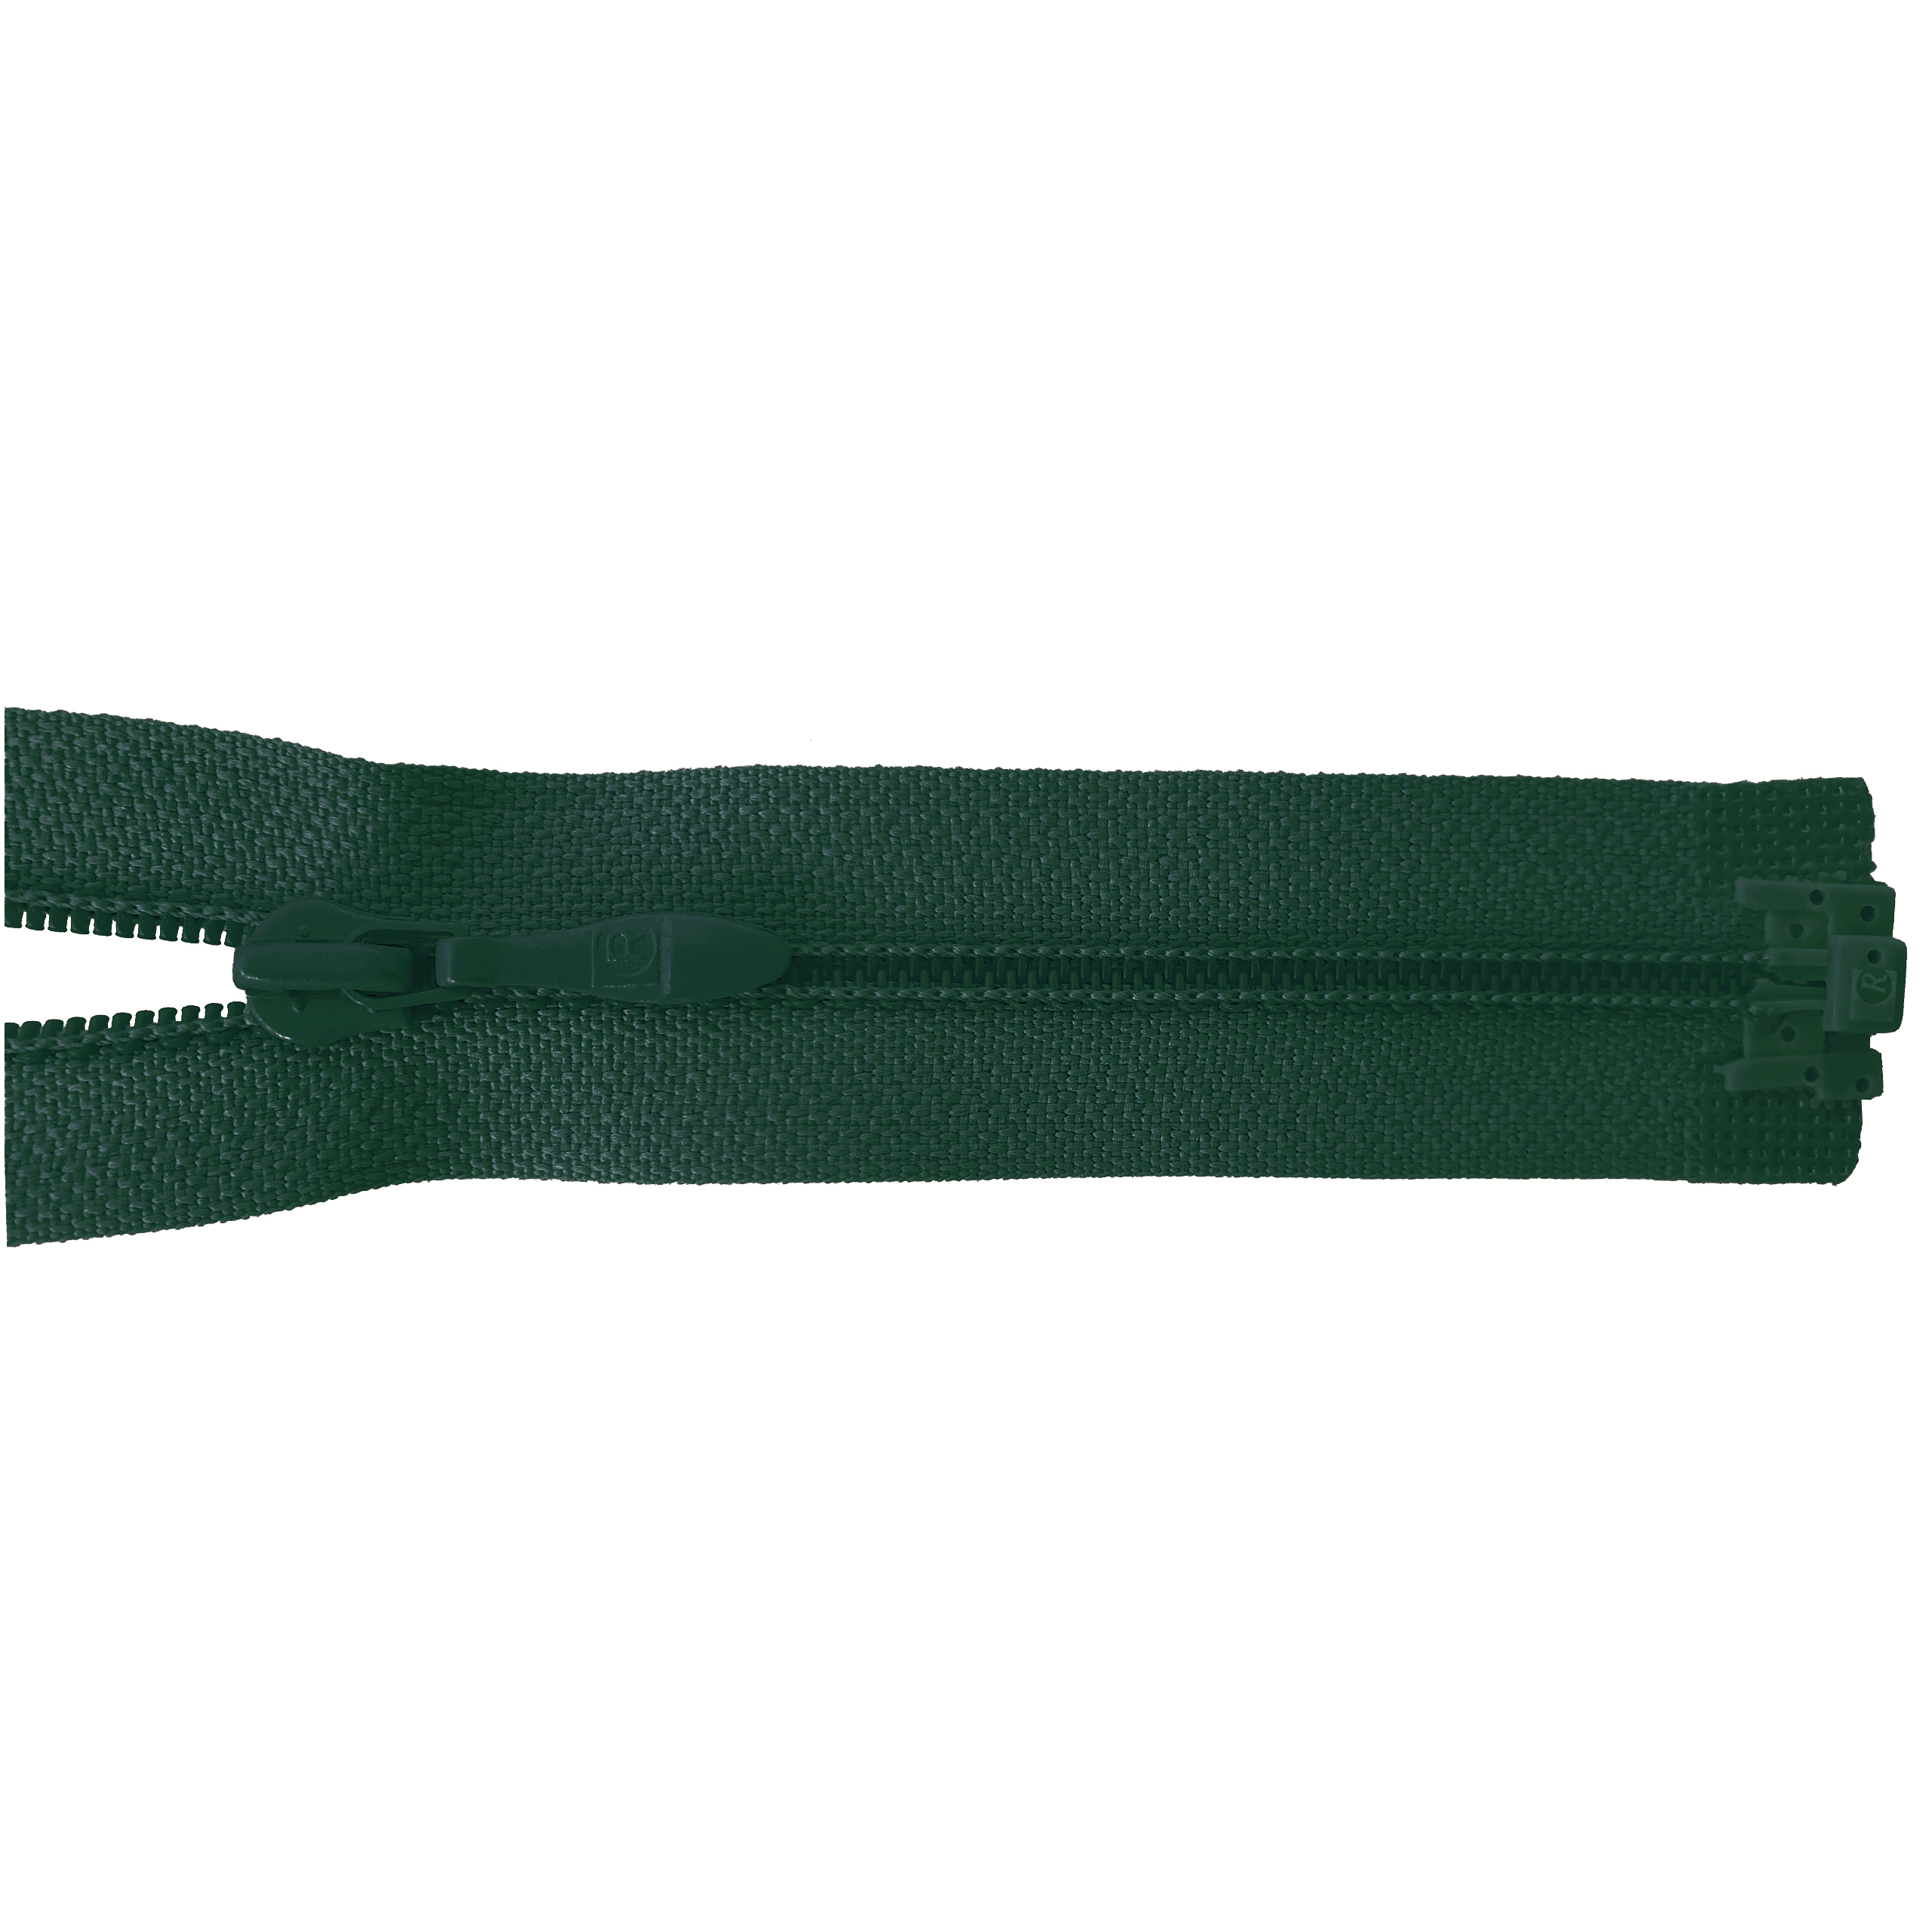 zipper 60cm,divisible, PES spiral, fein, british racing green